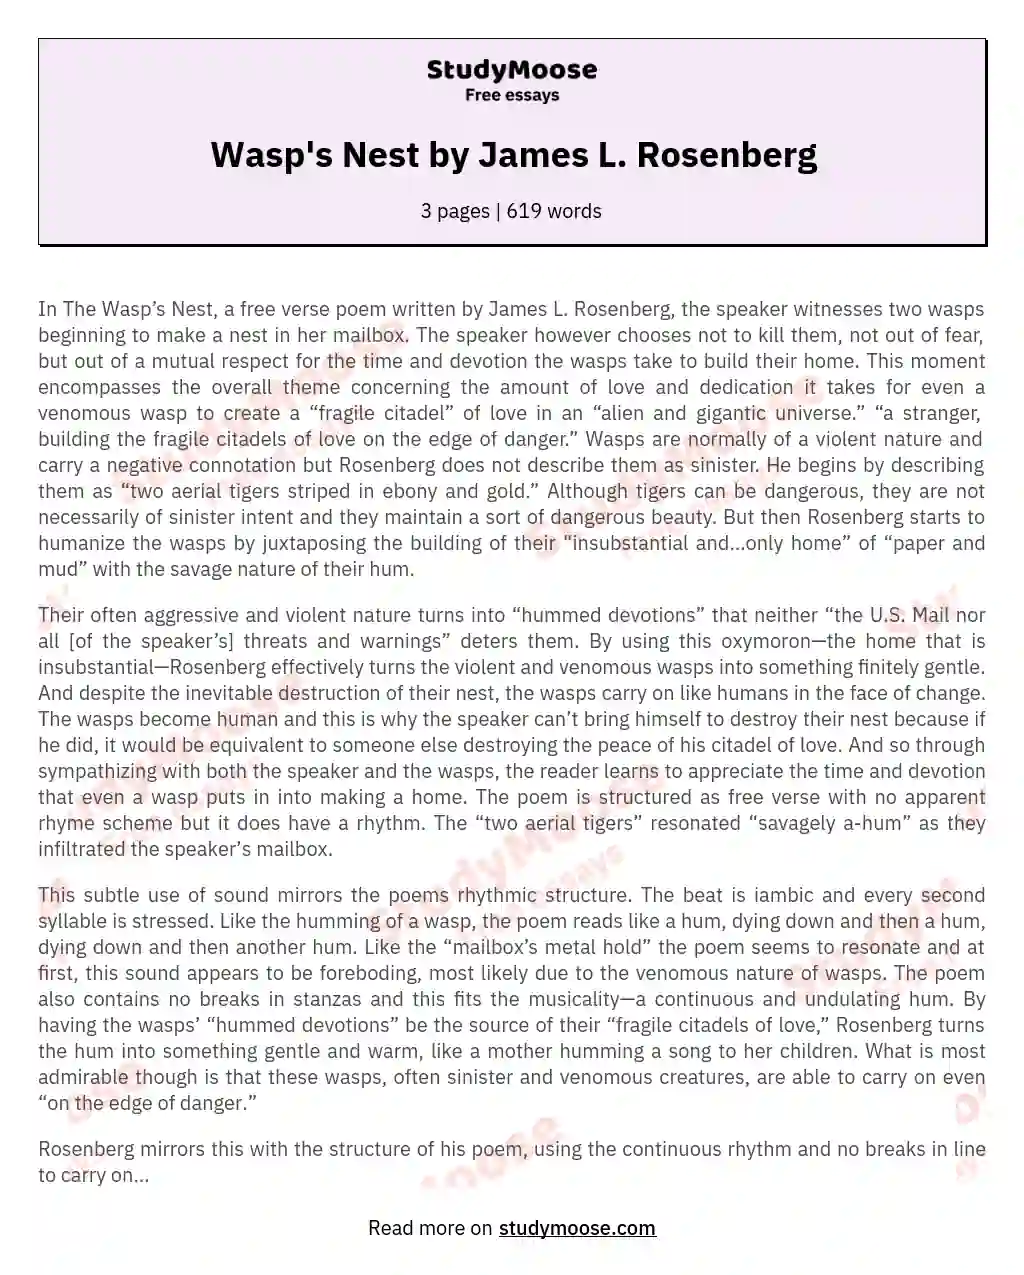 Wasp's Nest by James L. Rosenberg essay